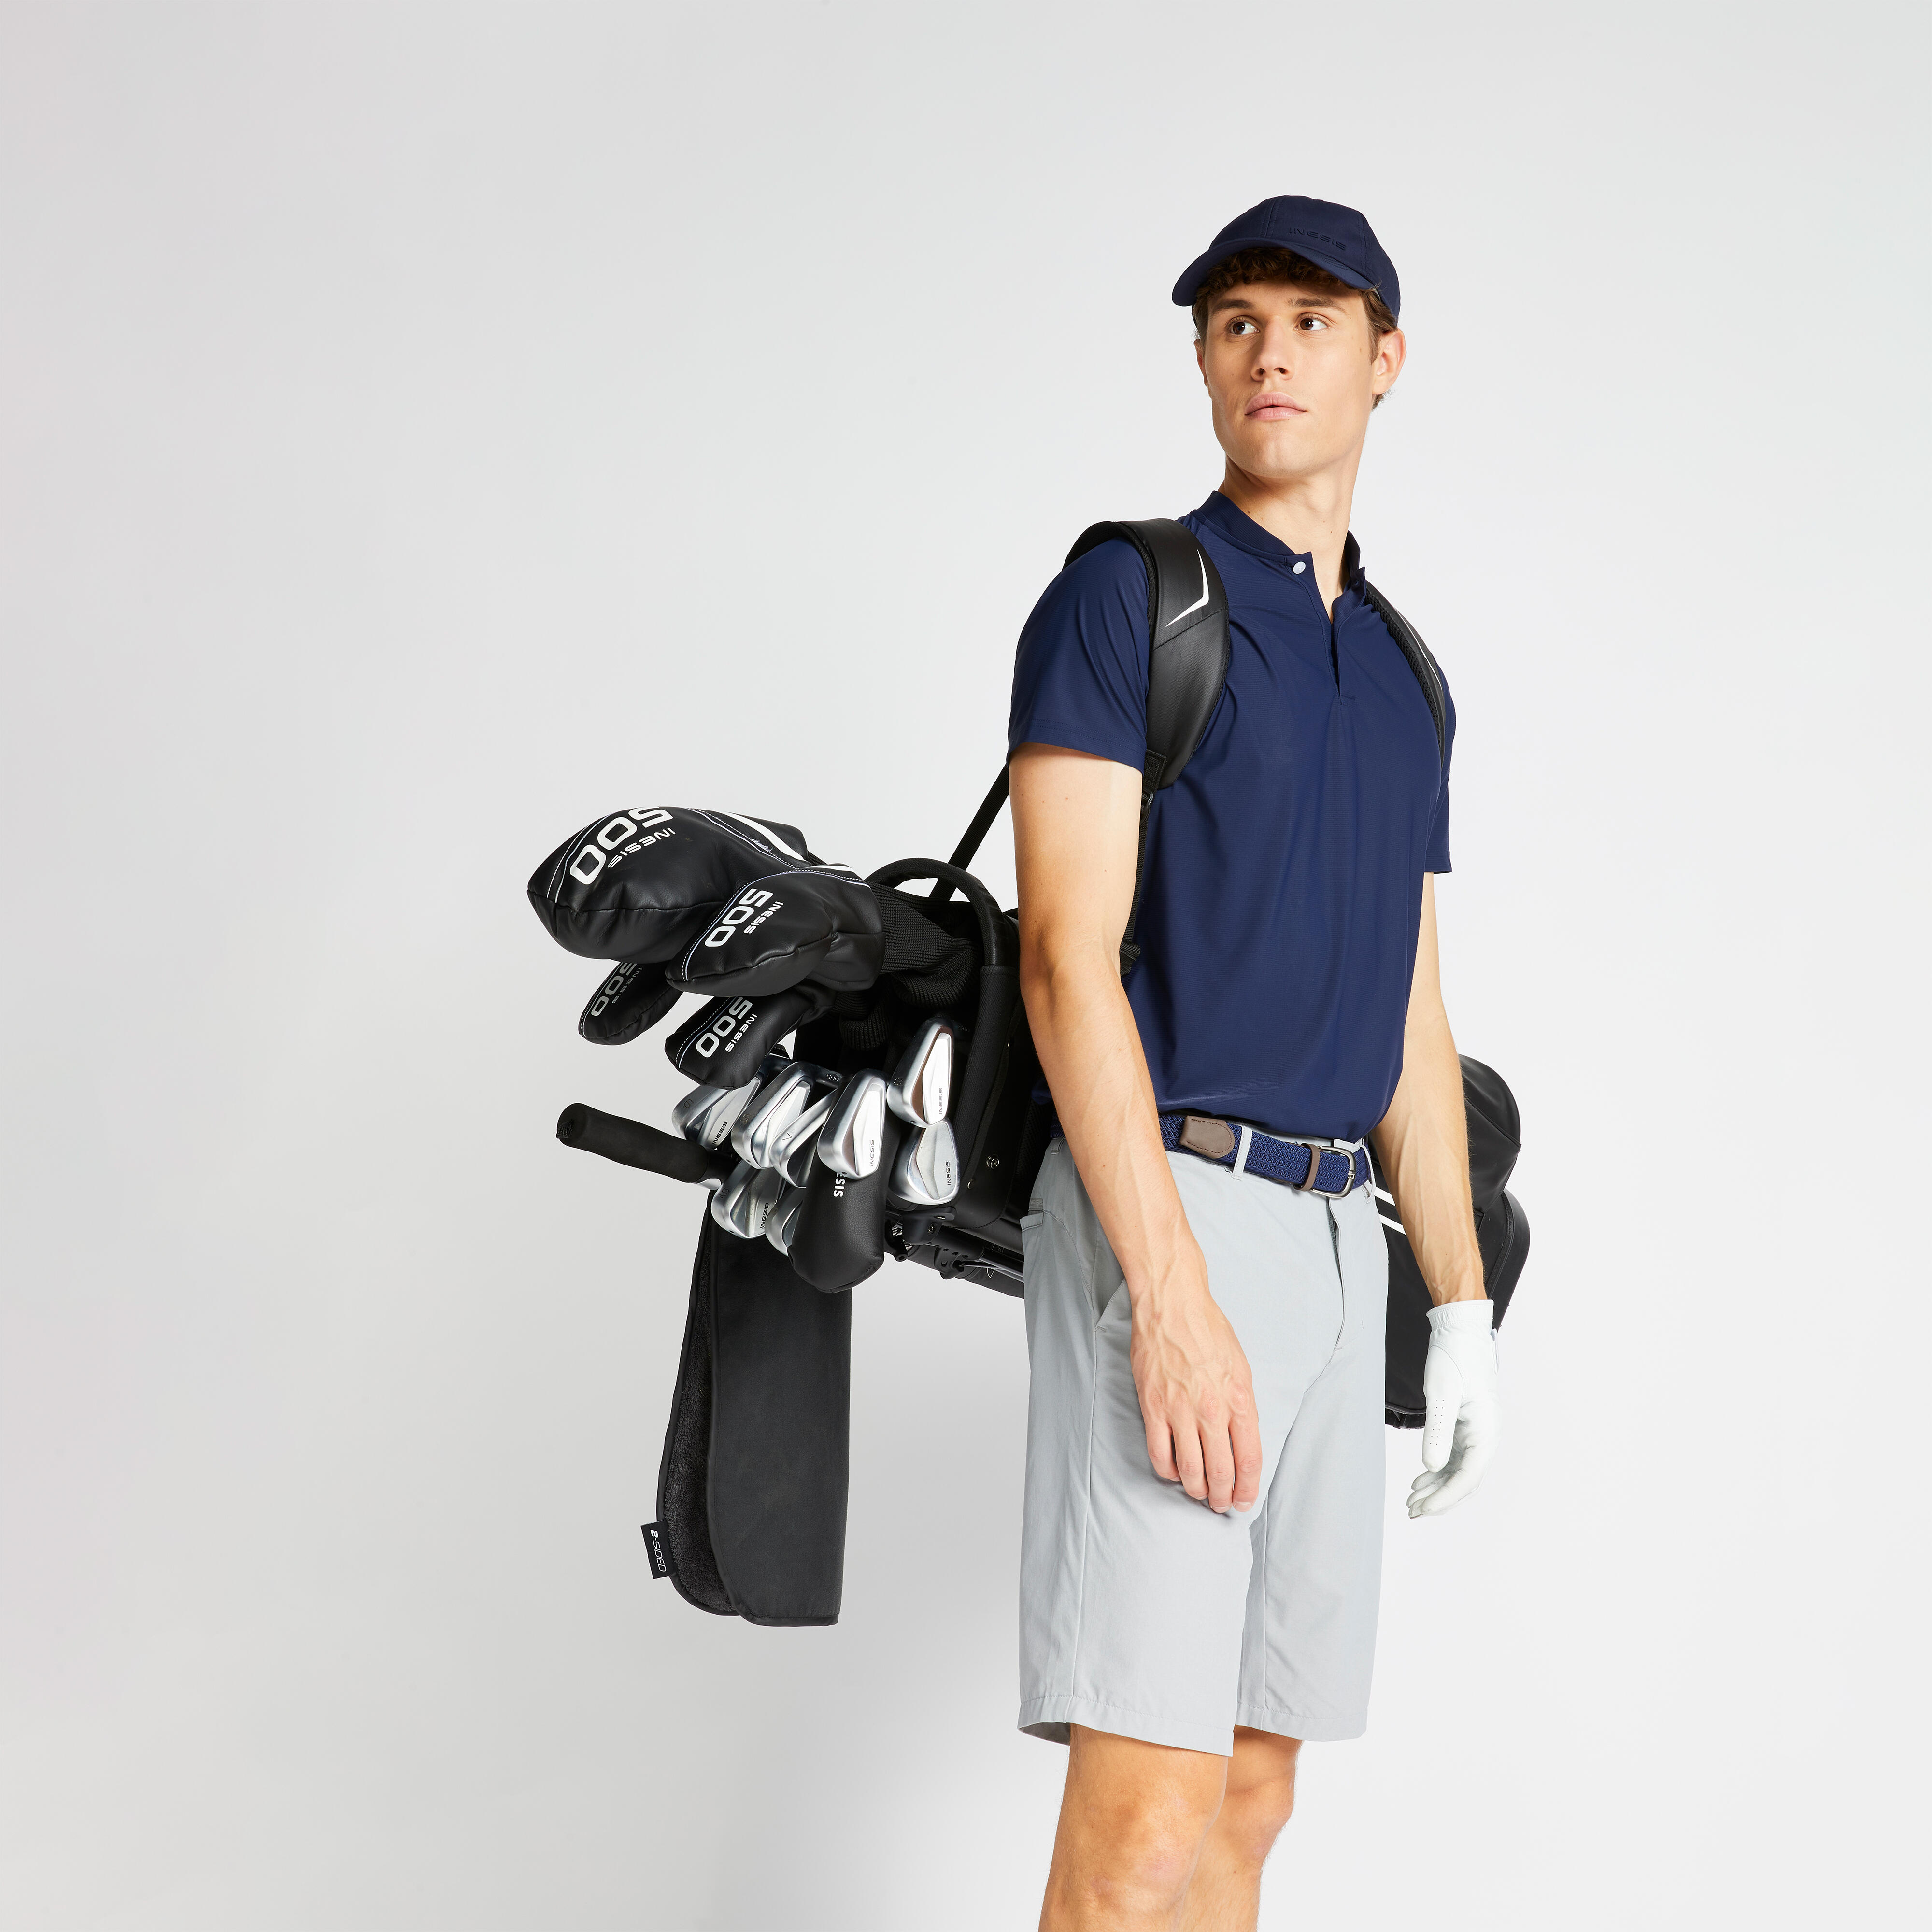 Polo de golf à manches courtes homme – WW 900 bleu marine - INESIS